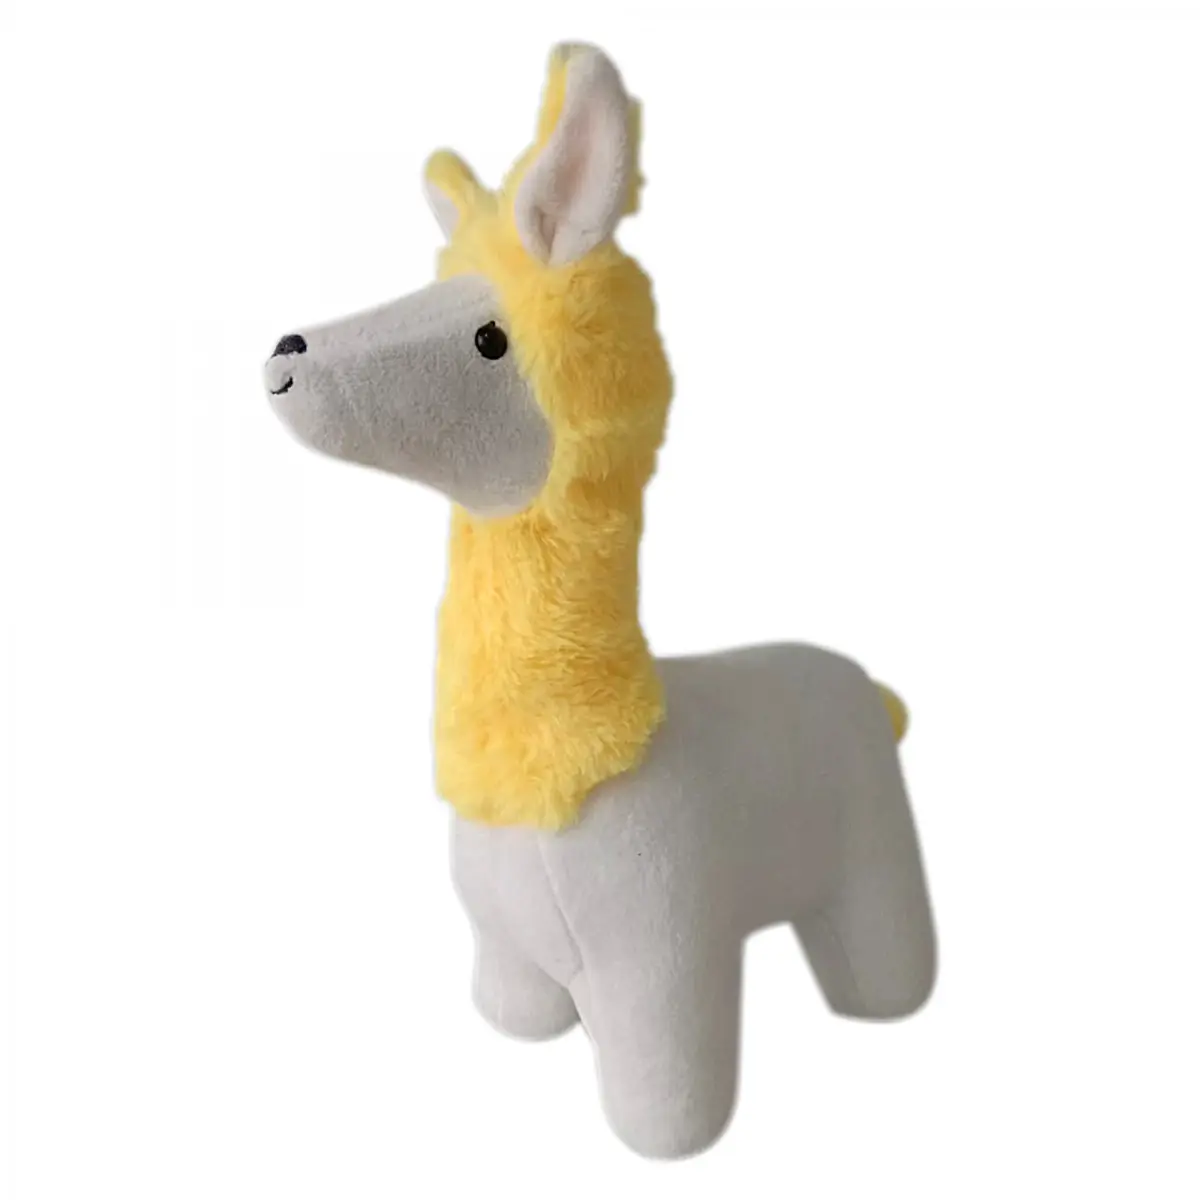 Furrendz Sunshine Yellow Llama 10" Plush for Kids 1 Year and Above